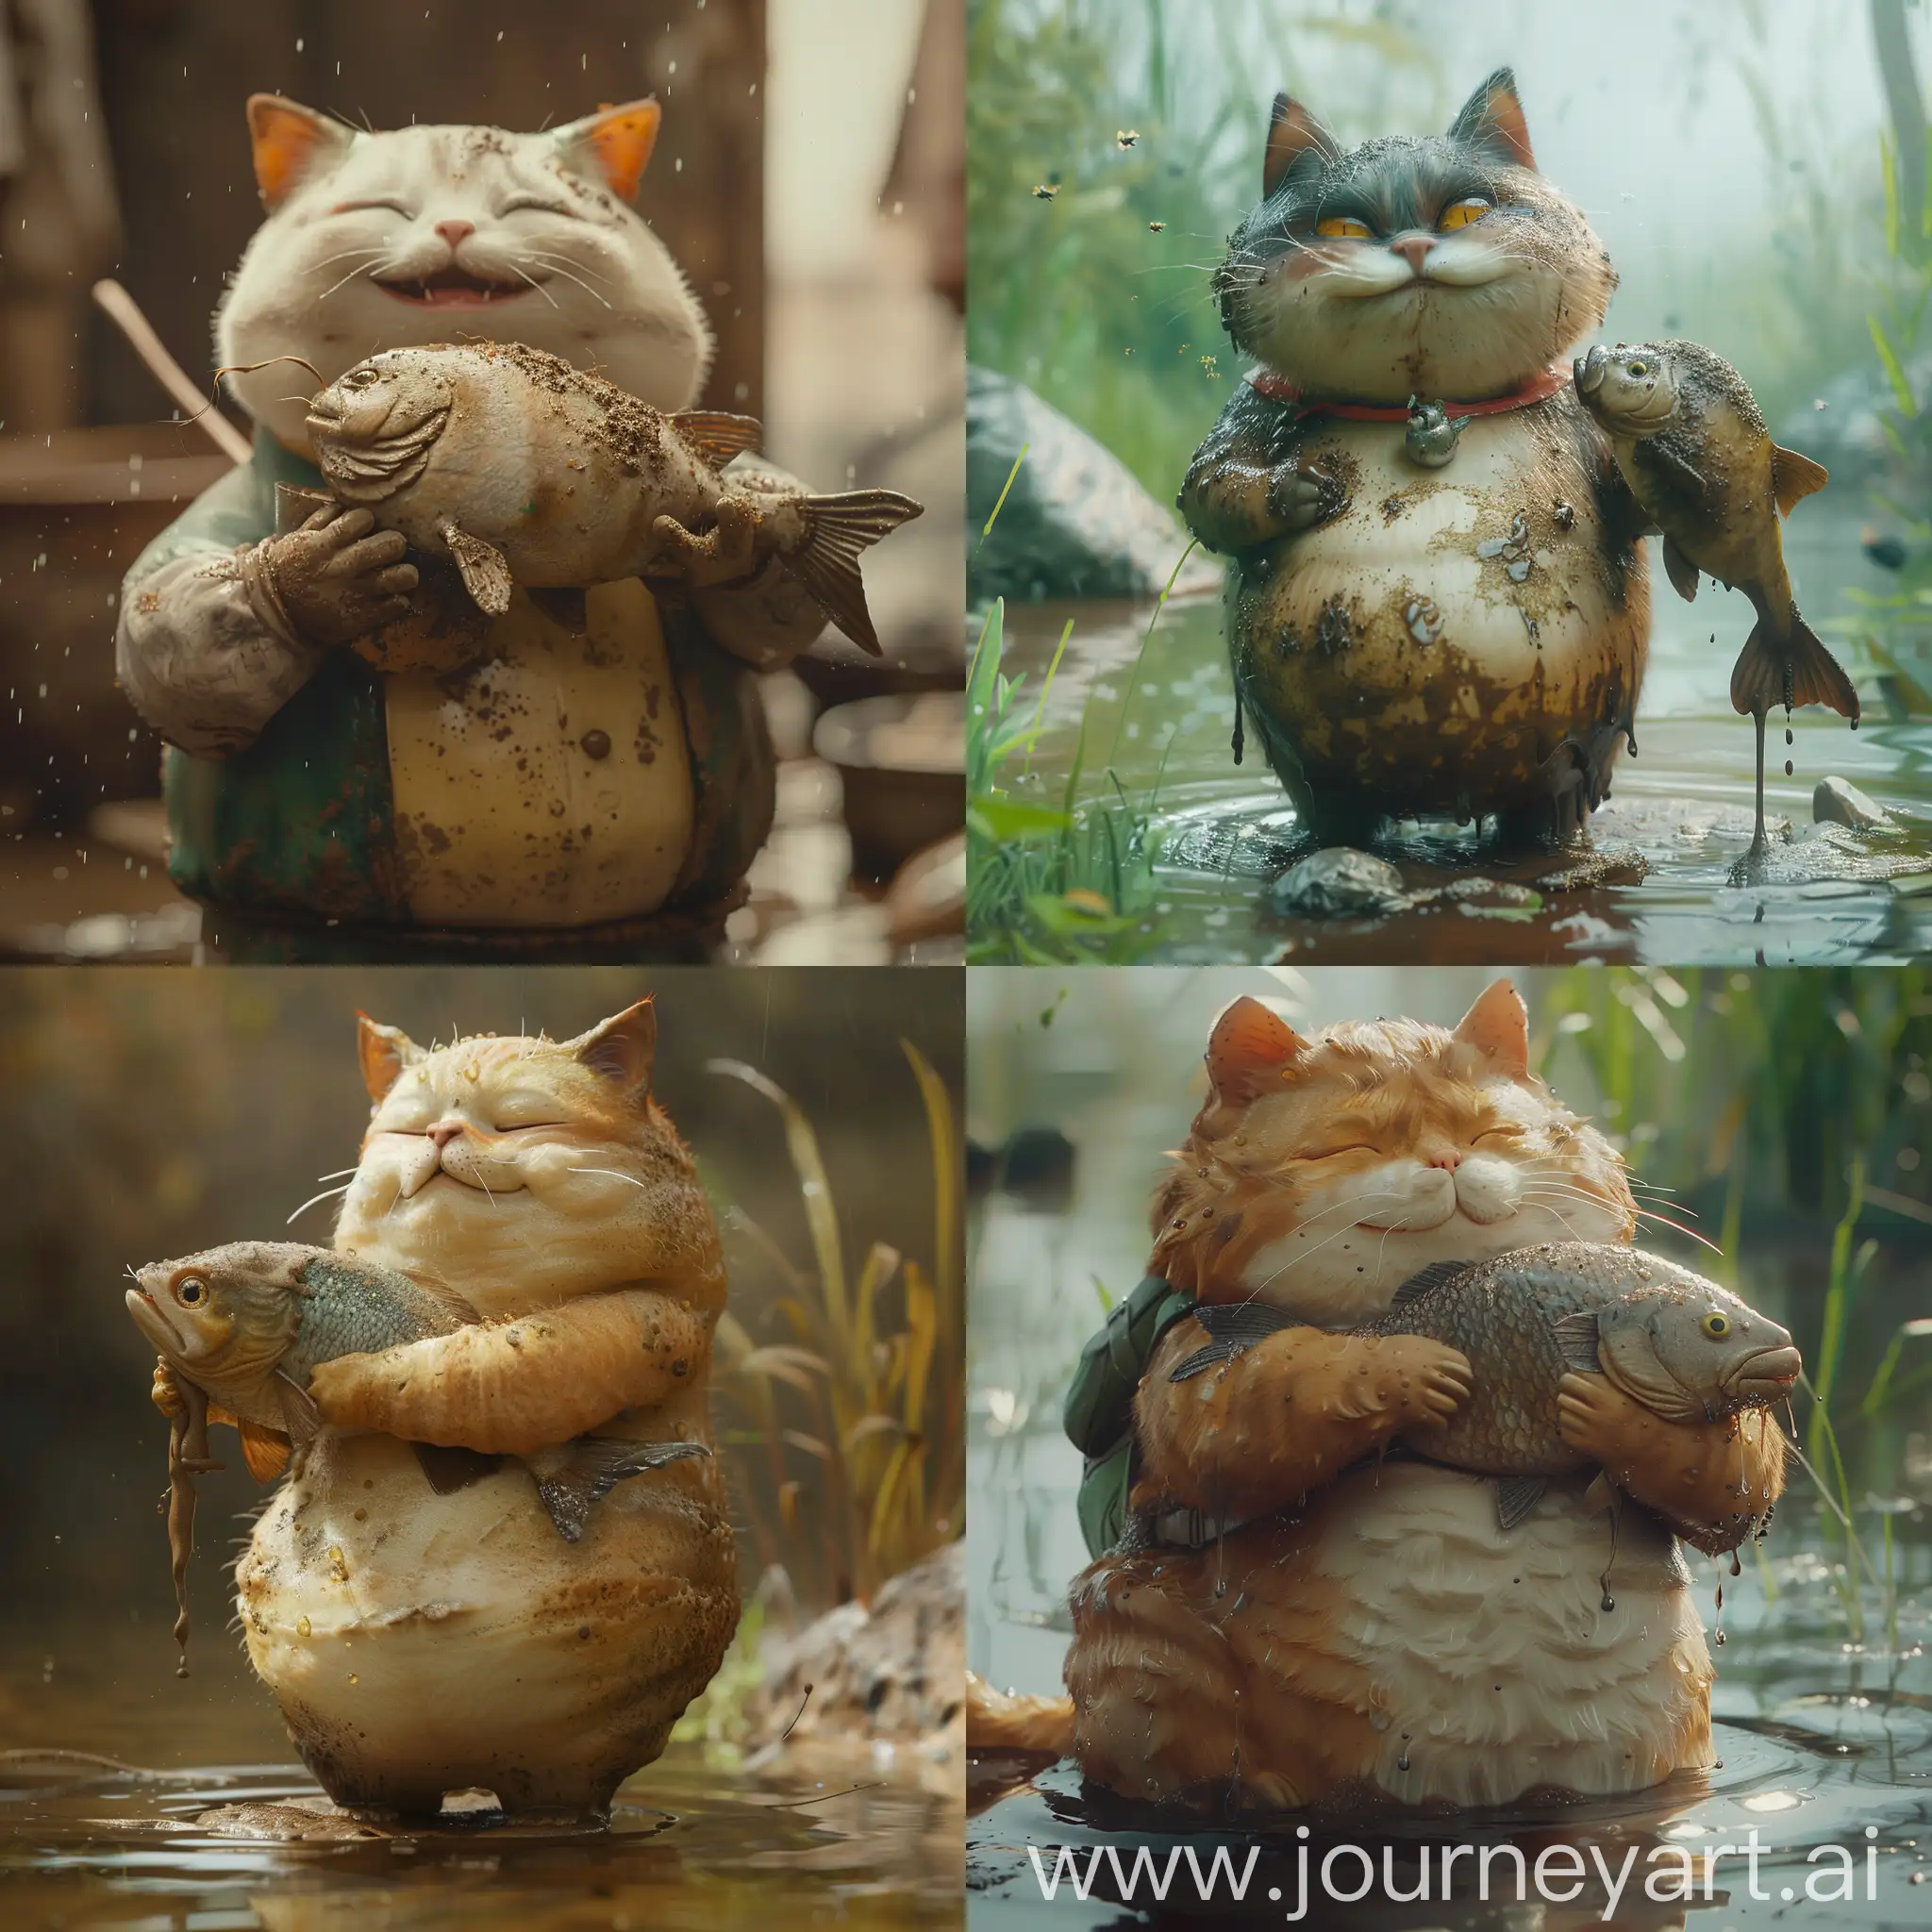 Joyful-Fat-Cat-with-Muddy-Fish-Realistic-Photorealism-in-4K8K